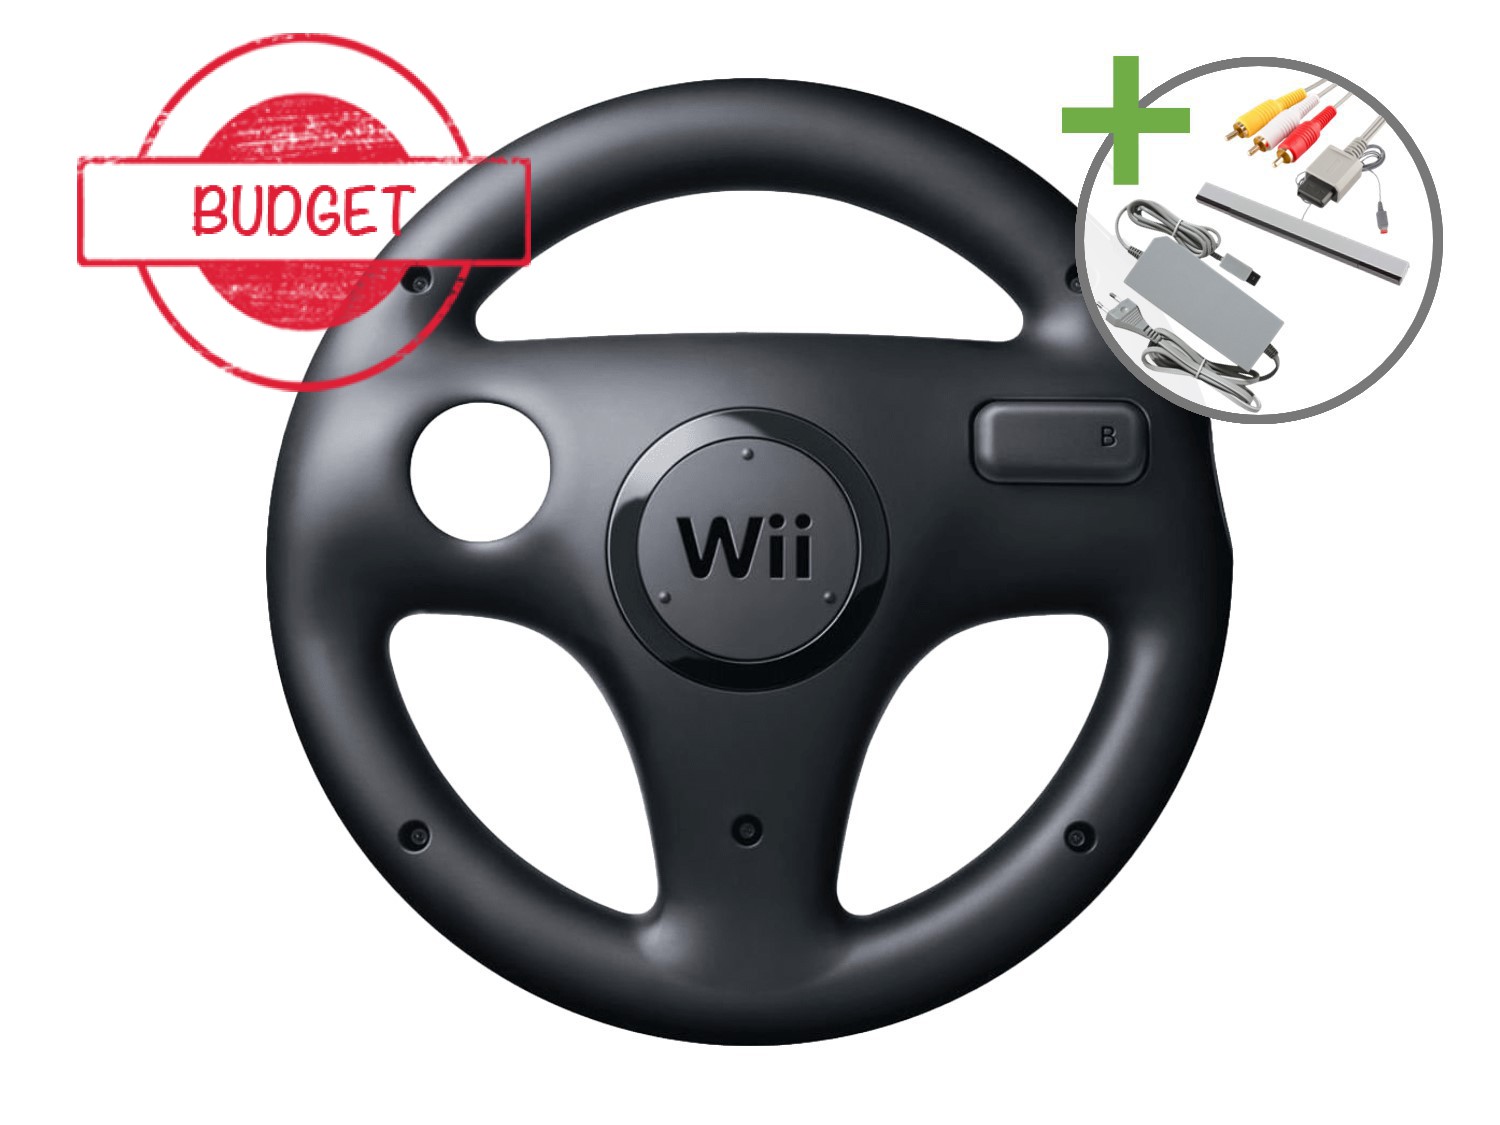 Nintendo Wii Starter Pack - Mario Kart Motion Plus Black Edition - Budget - Wii Hardware - 4